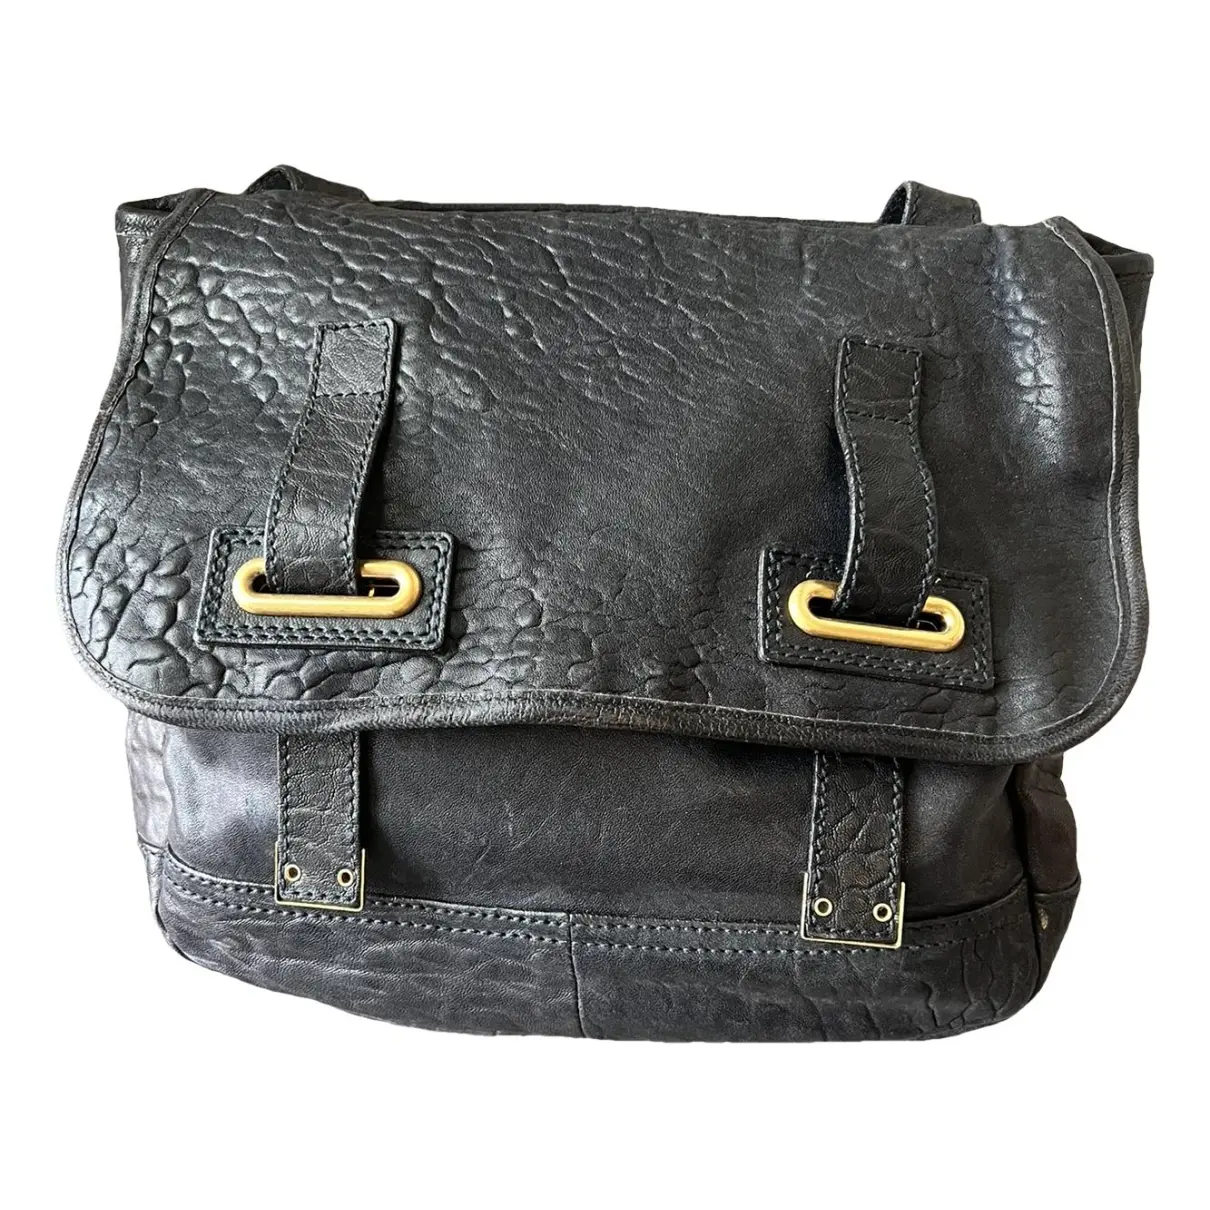 Messenger leather handbag